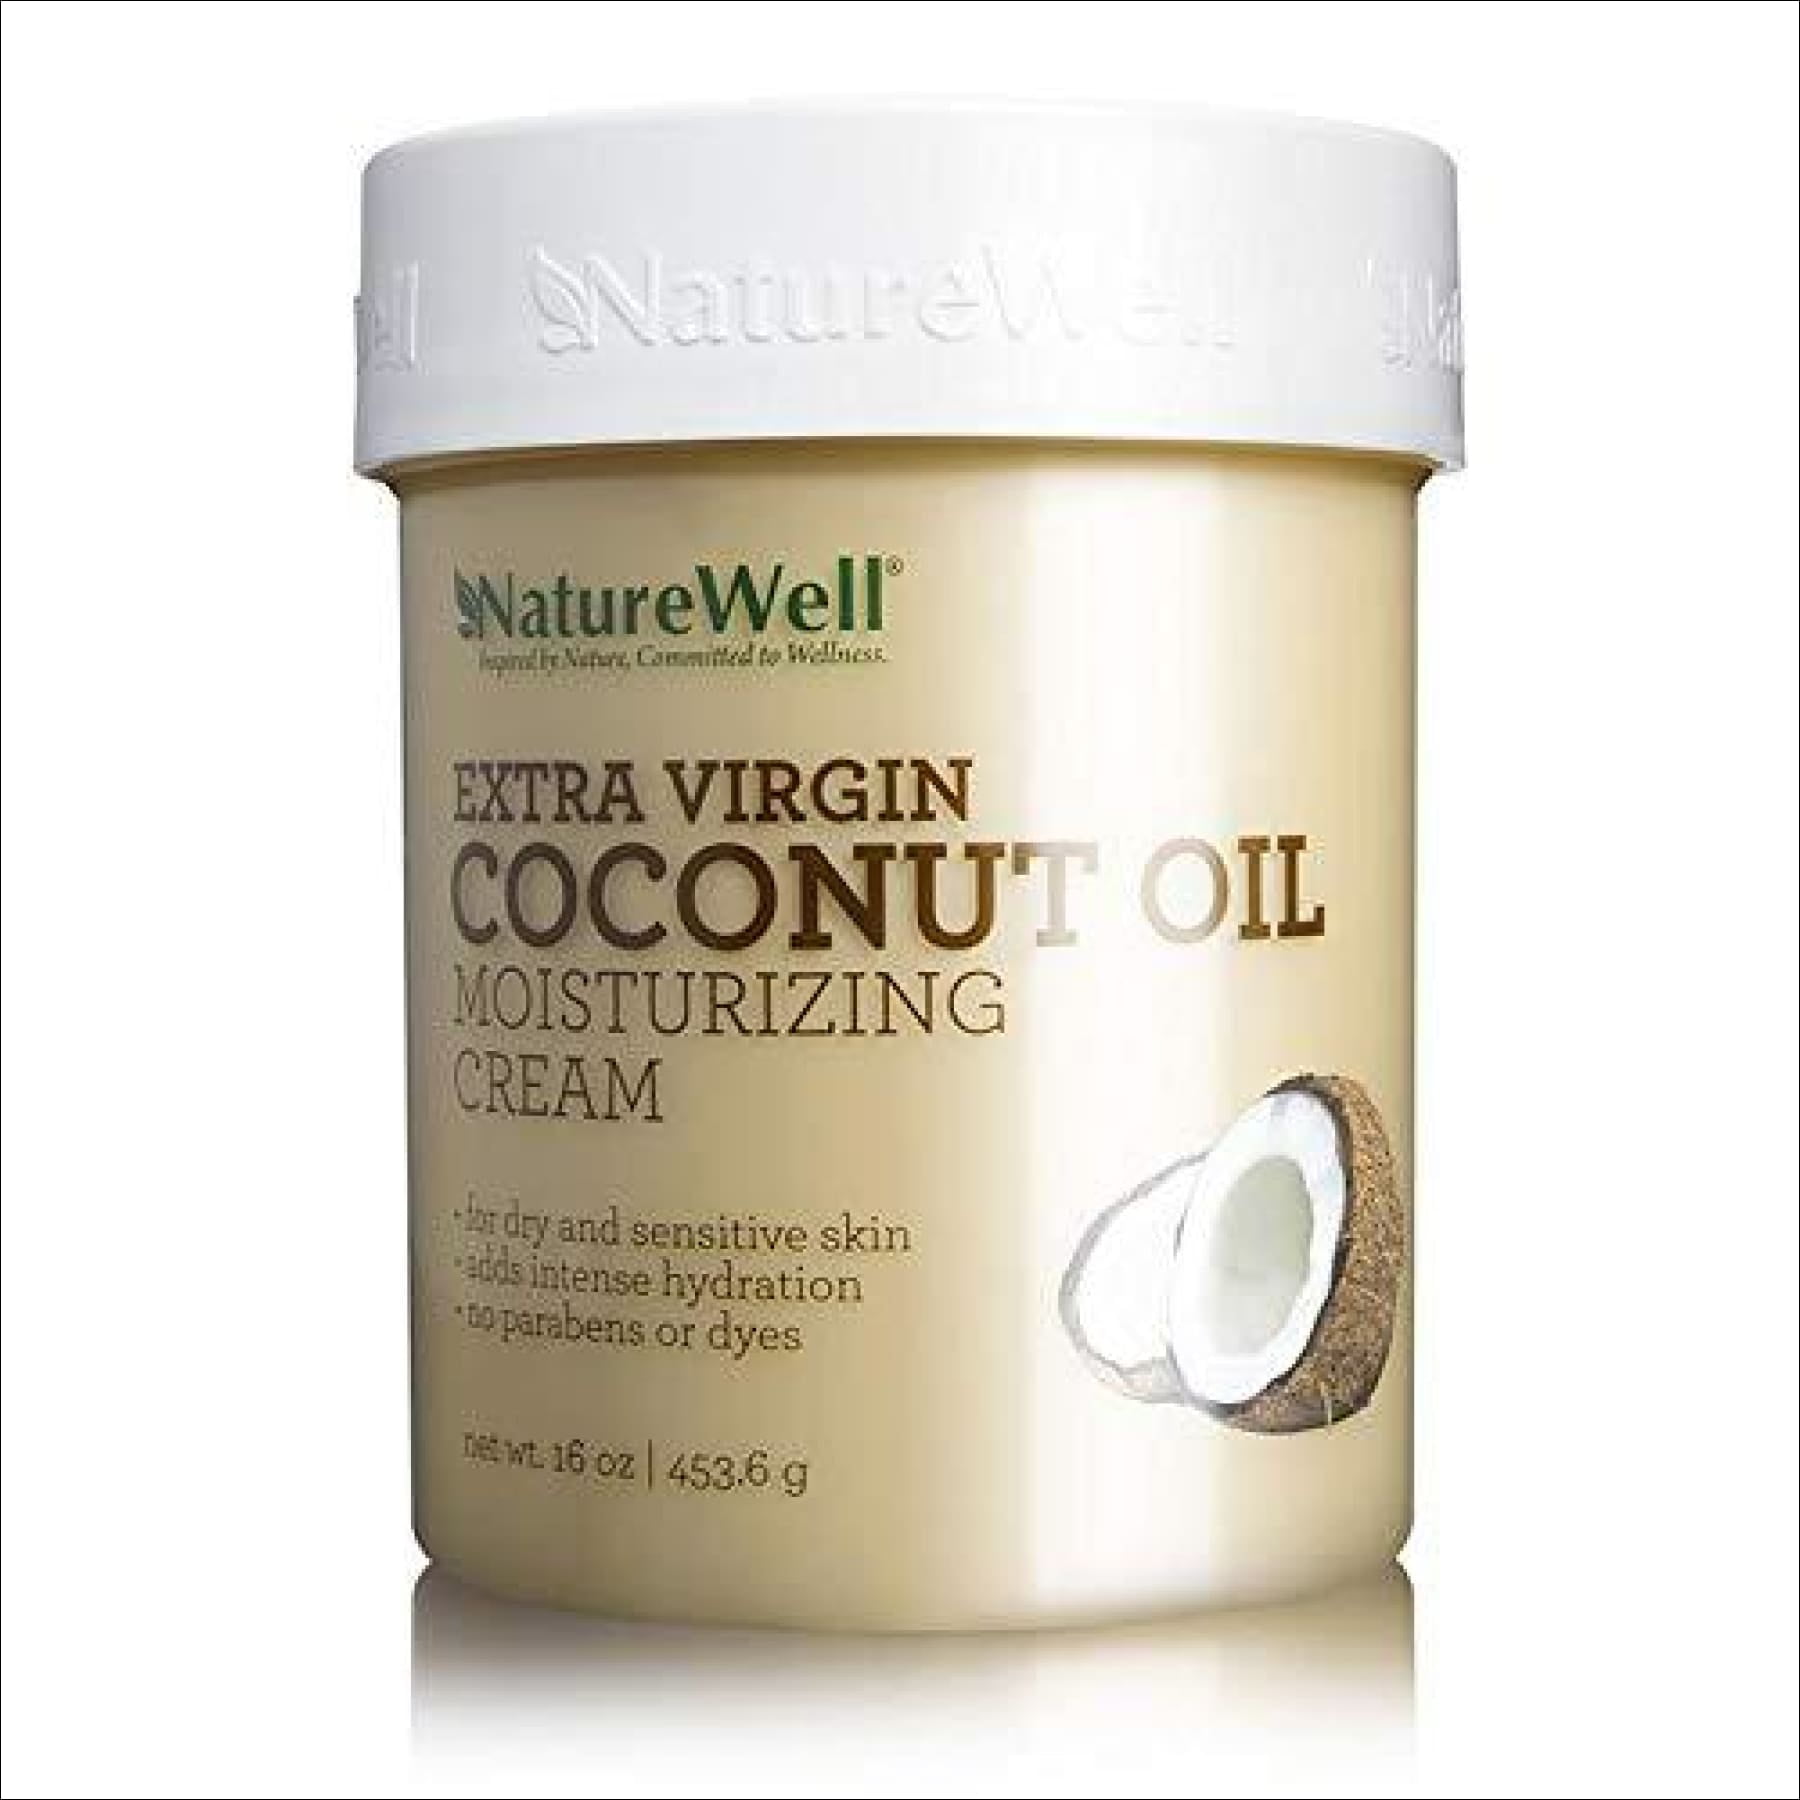 NatureWell Extra Virgin Coconut Oil Moisturizing Cream for Face & Body